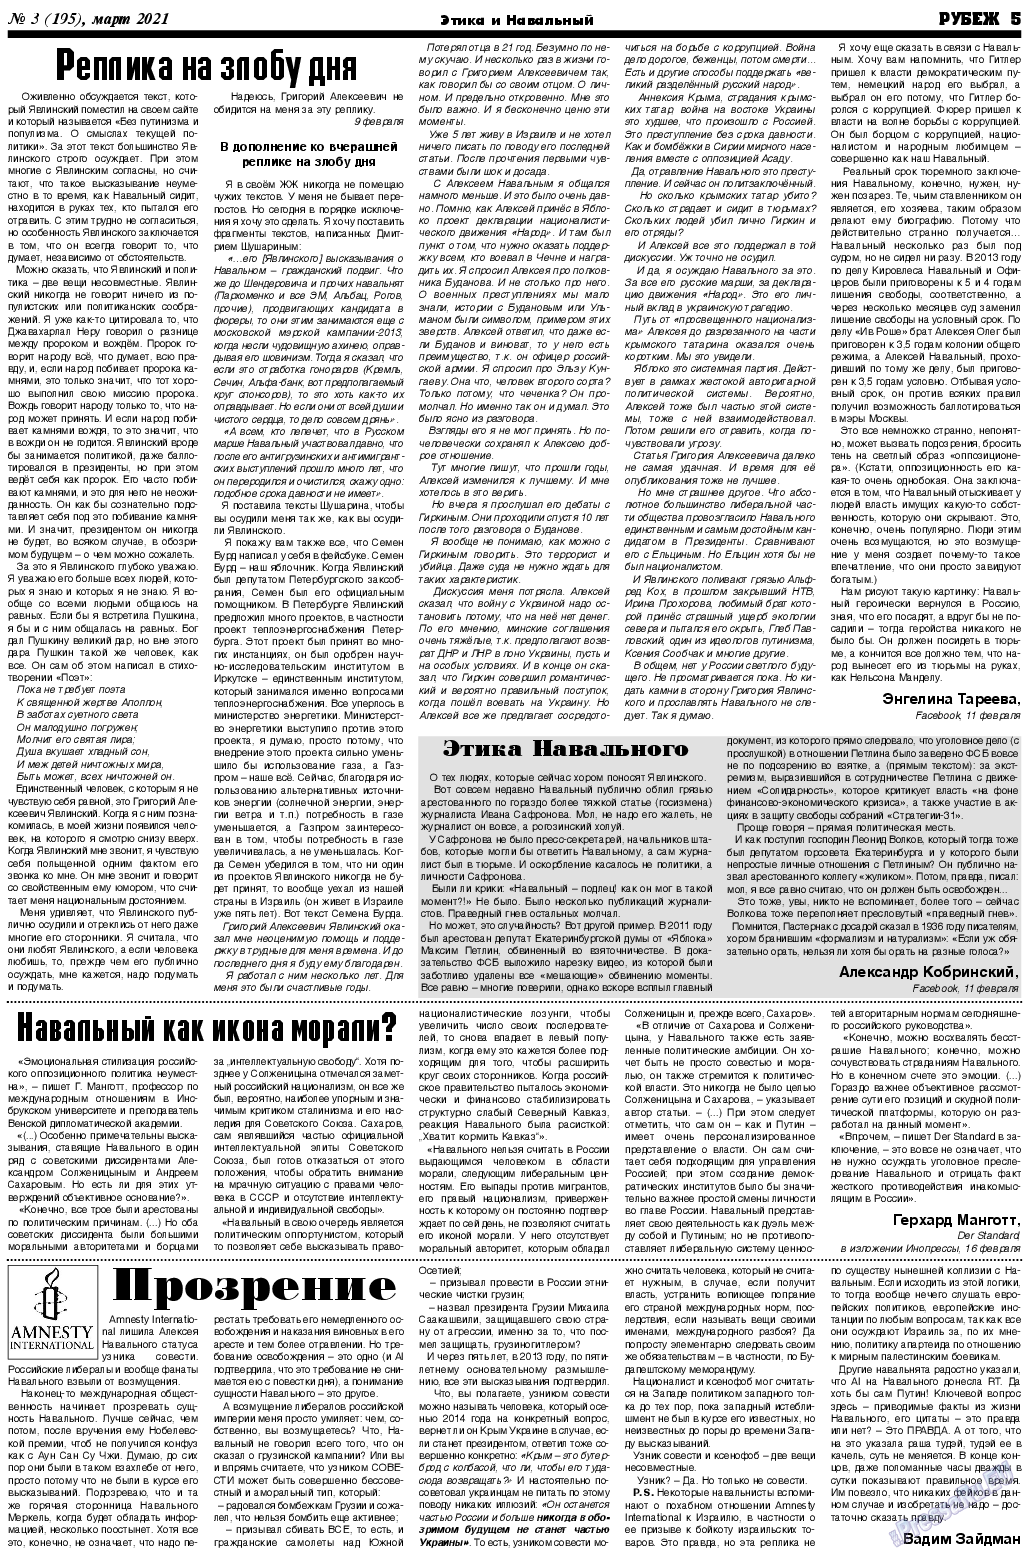 Рубеж, газета. 2021 №3 стр.5